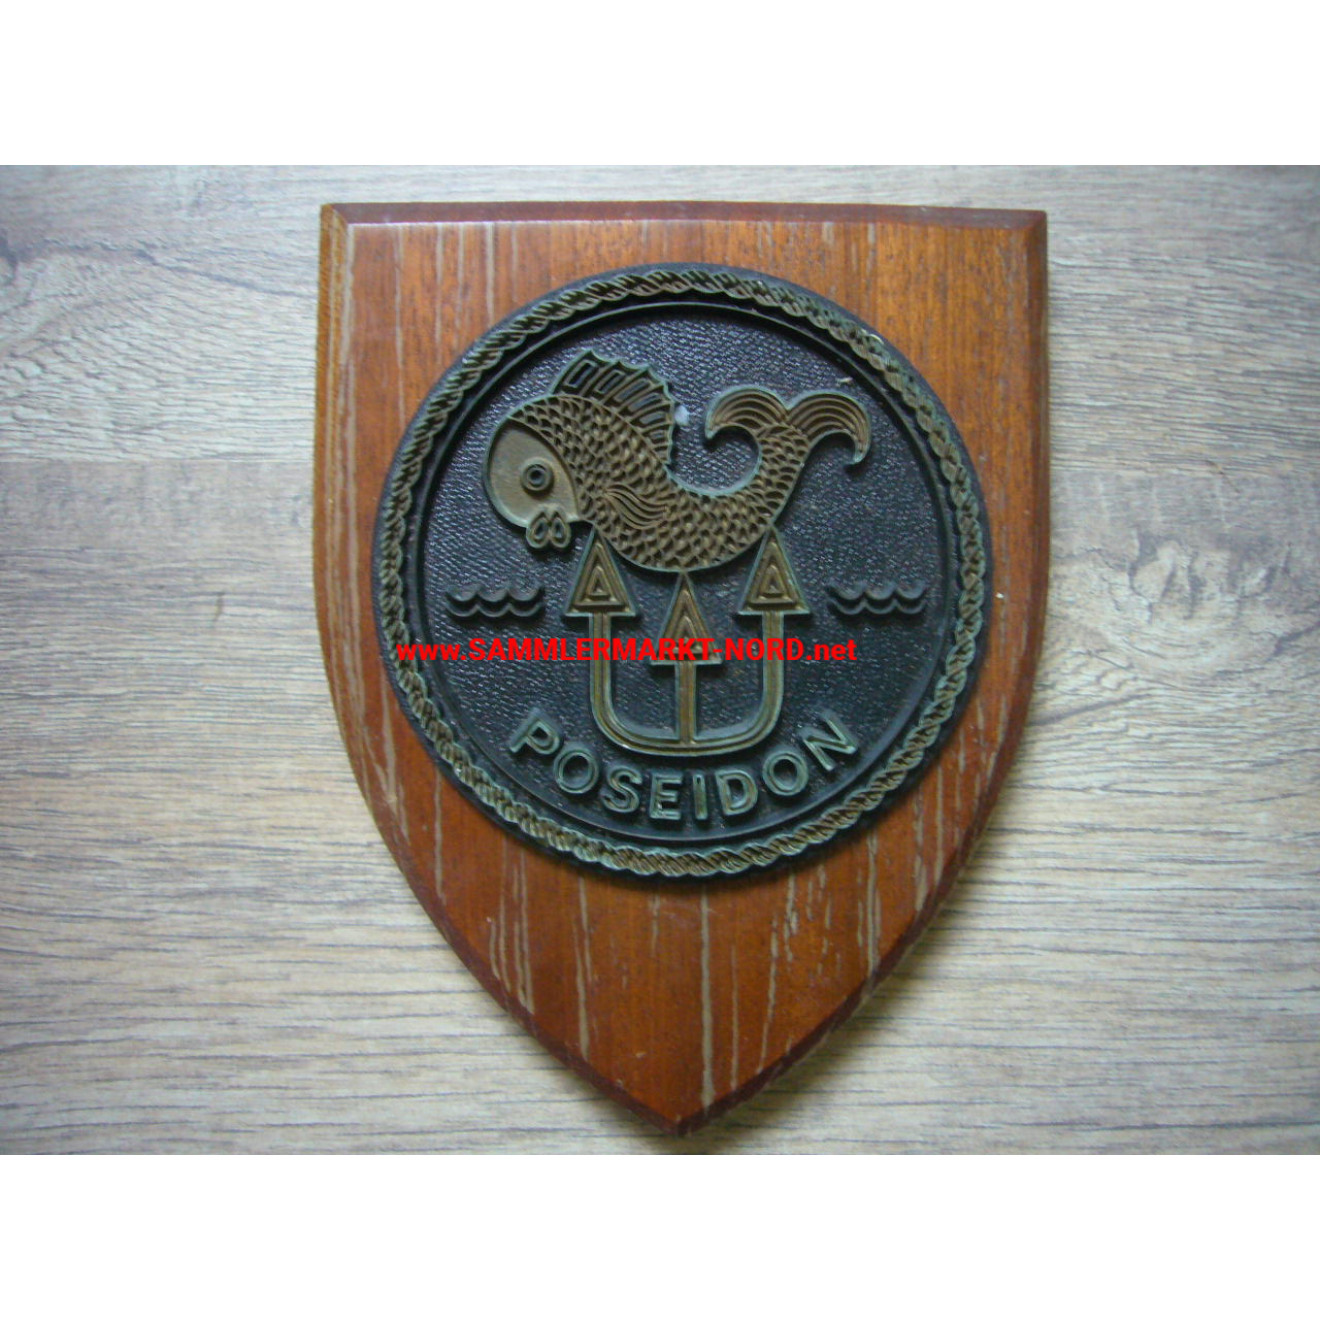 German Navy - ship coat of arms POSEIDON